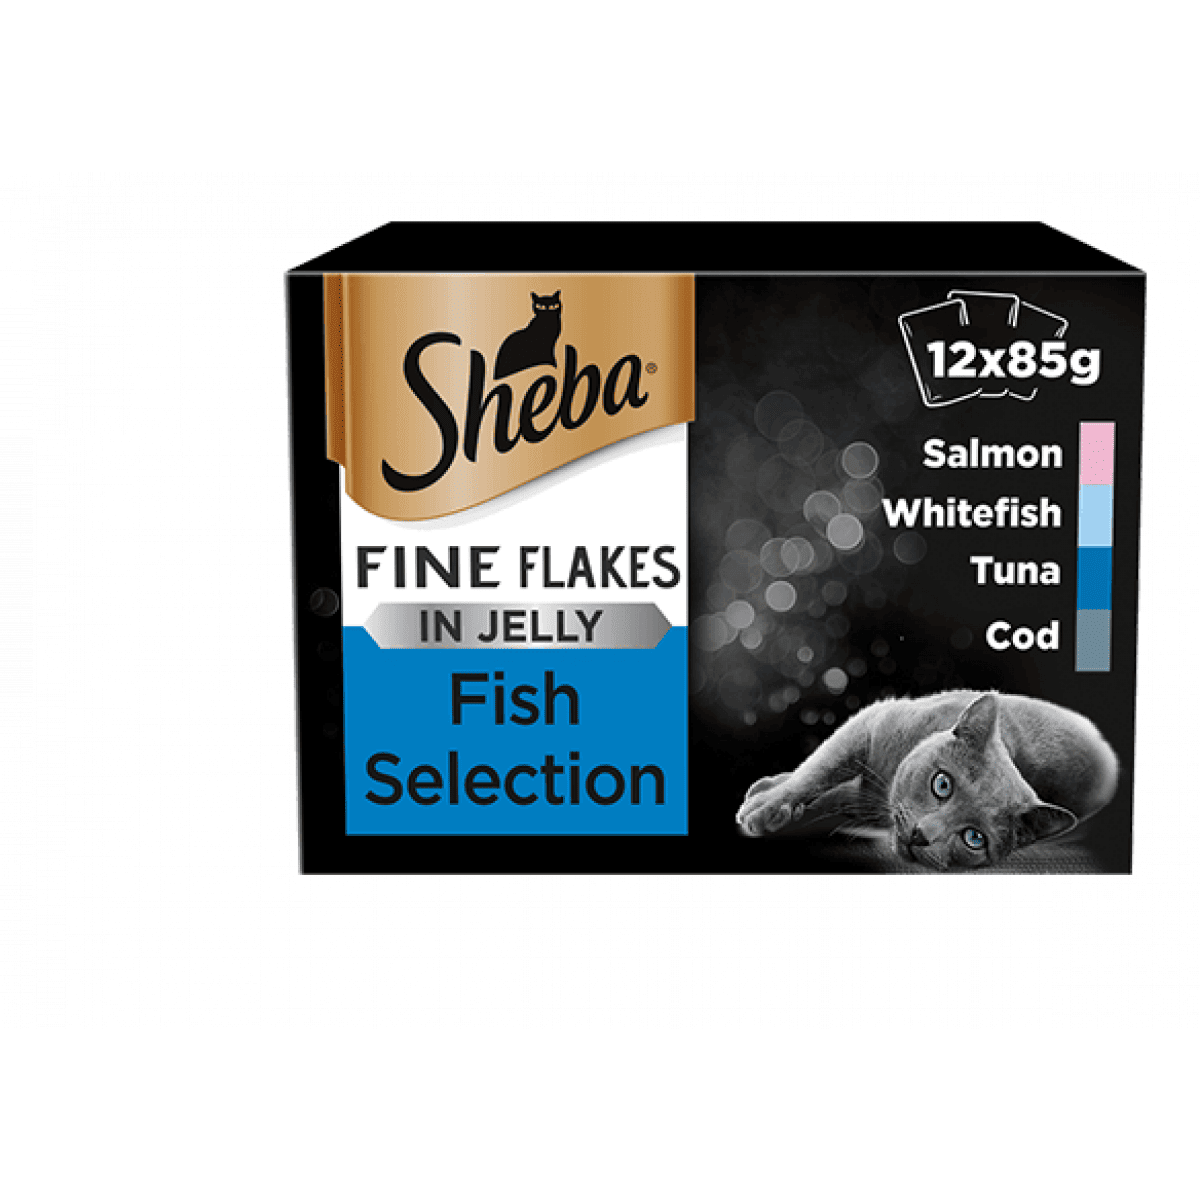 Sheba FF Fish Selection in Jelly 12 x 85g Main Image